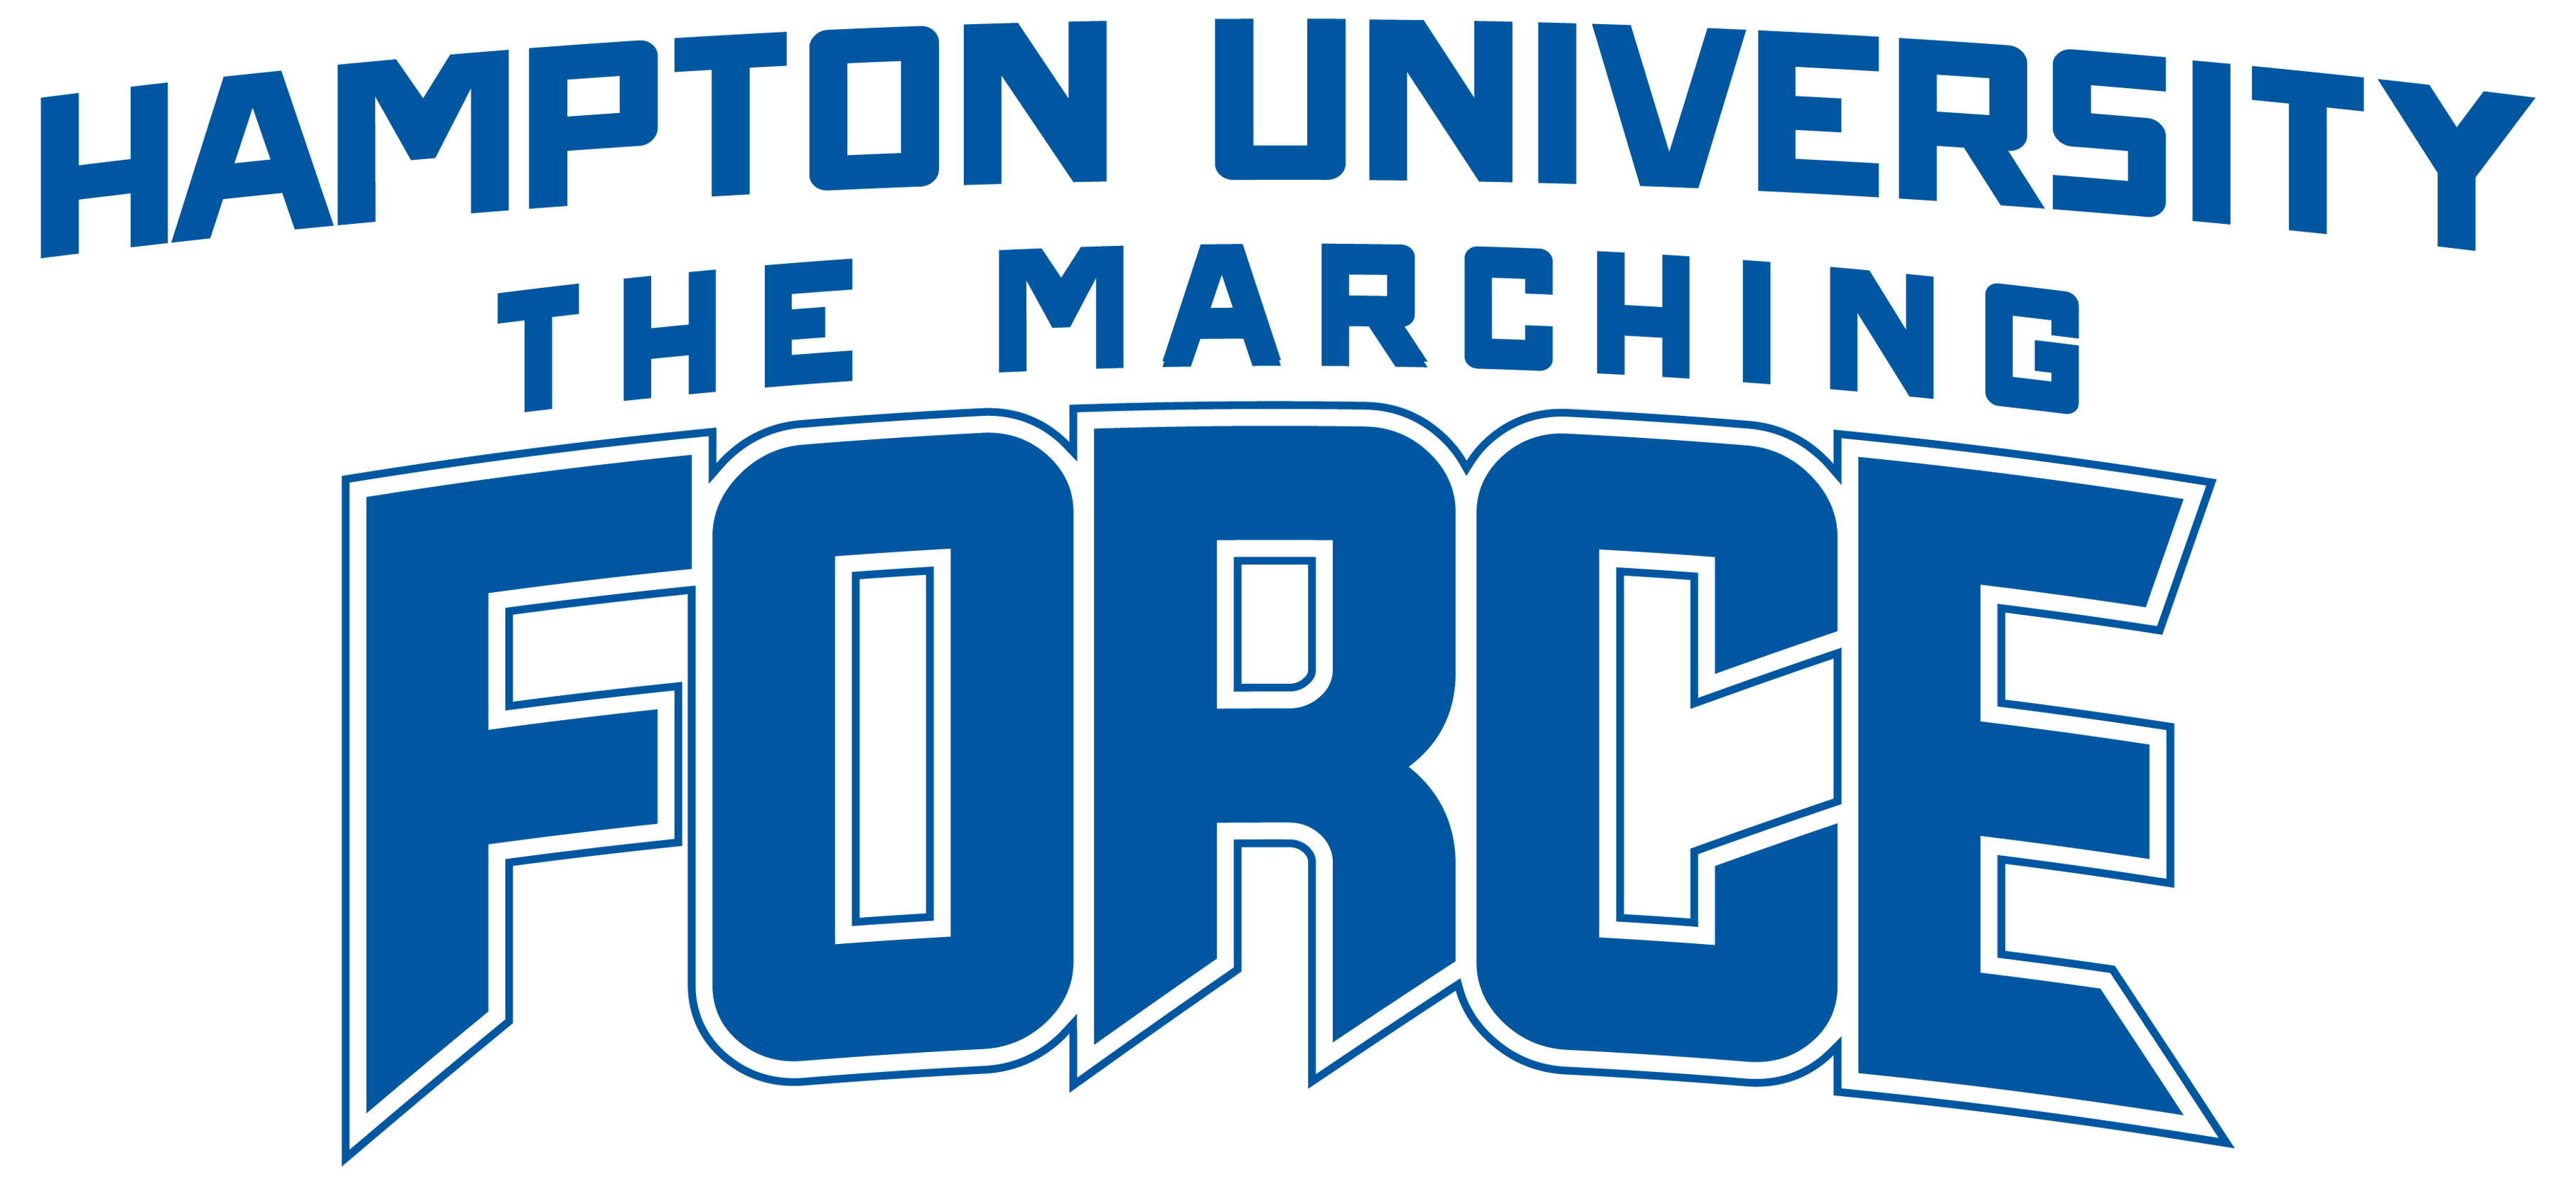 Hampton University Marching FORCE band wordmark in blue